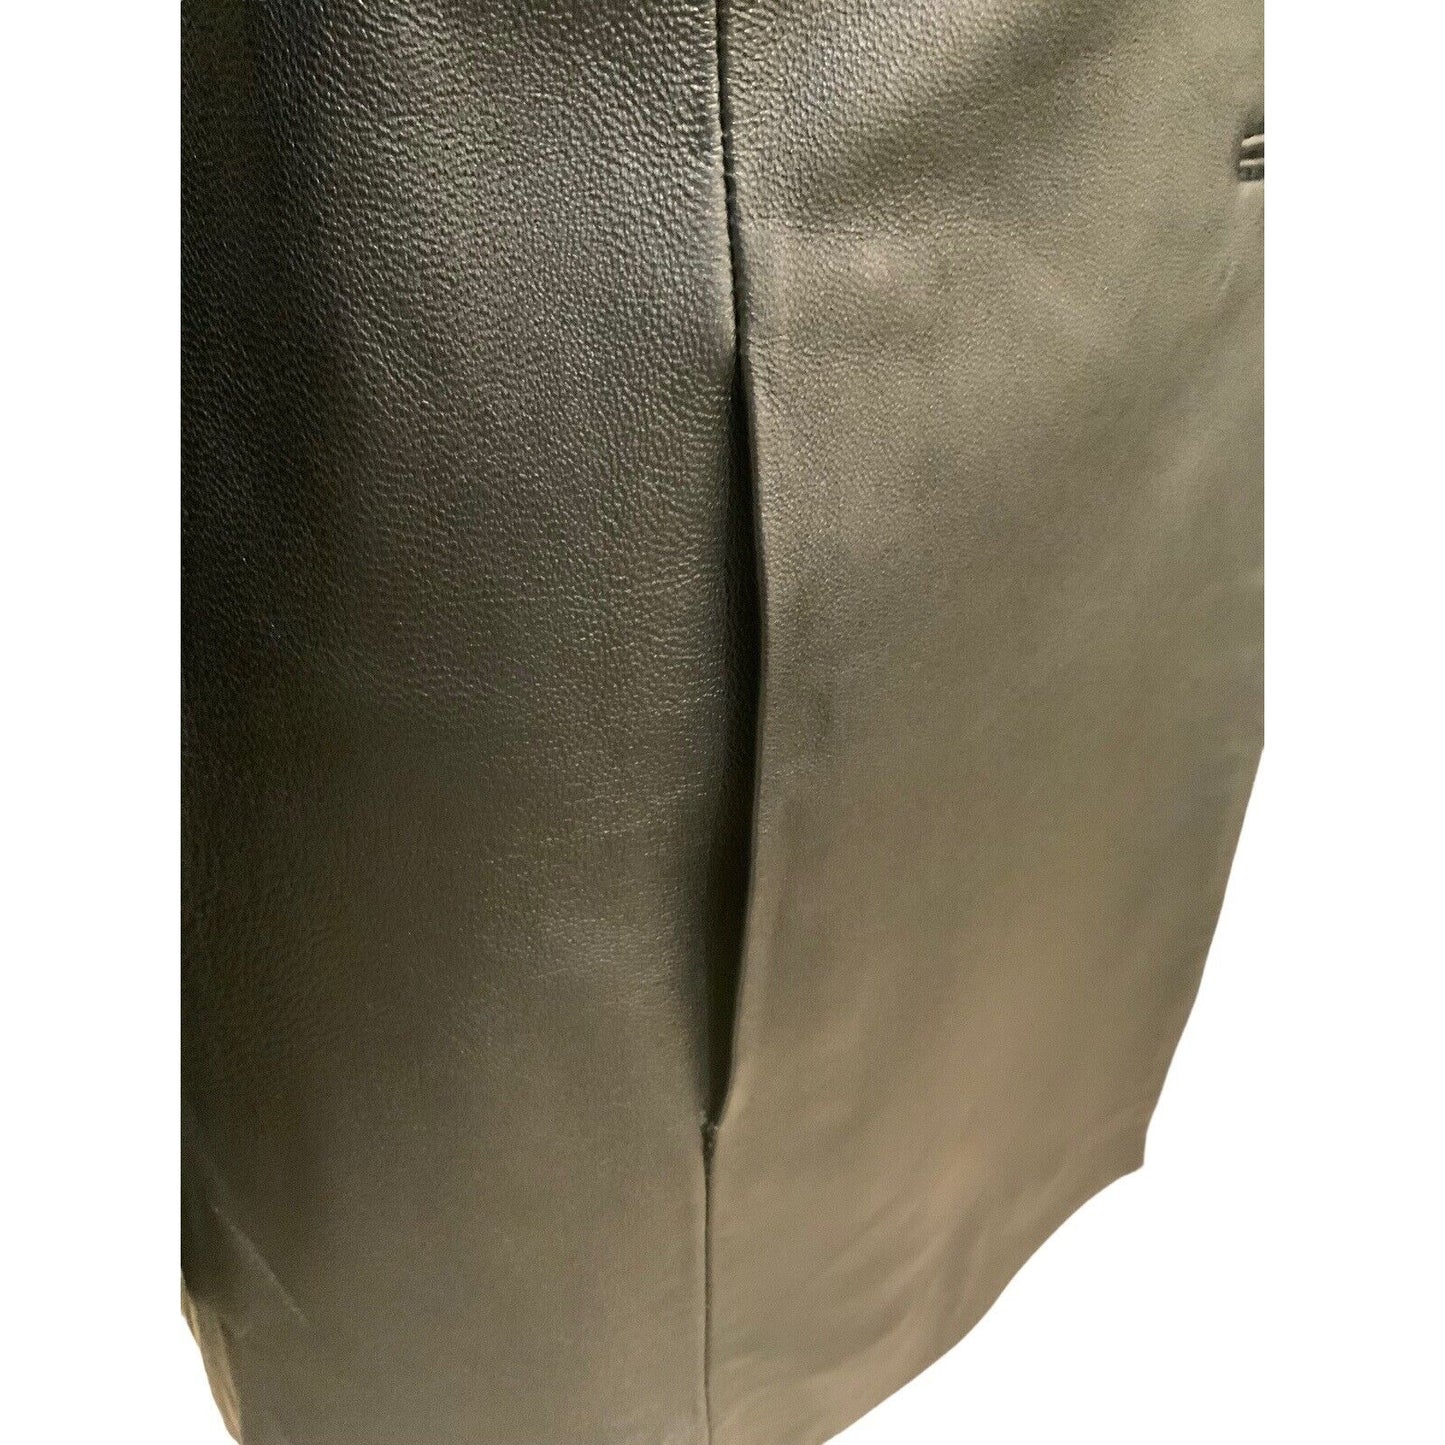 Closeup Of Jacket Pocket